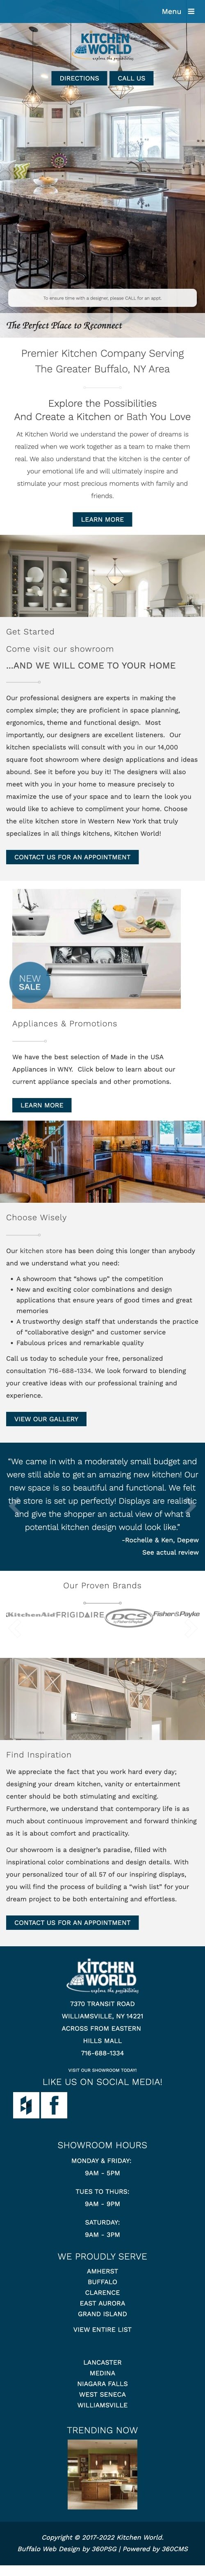 Kitchen World Website - Mobile